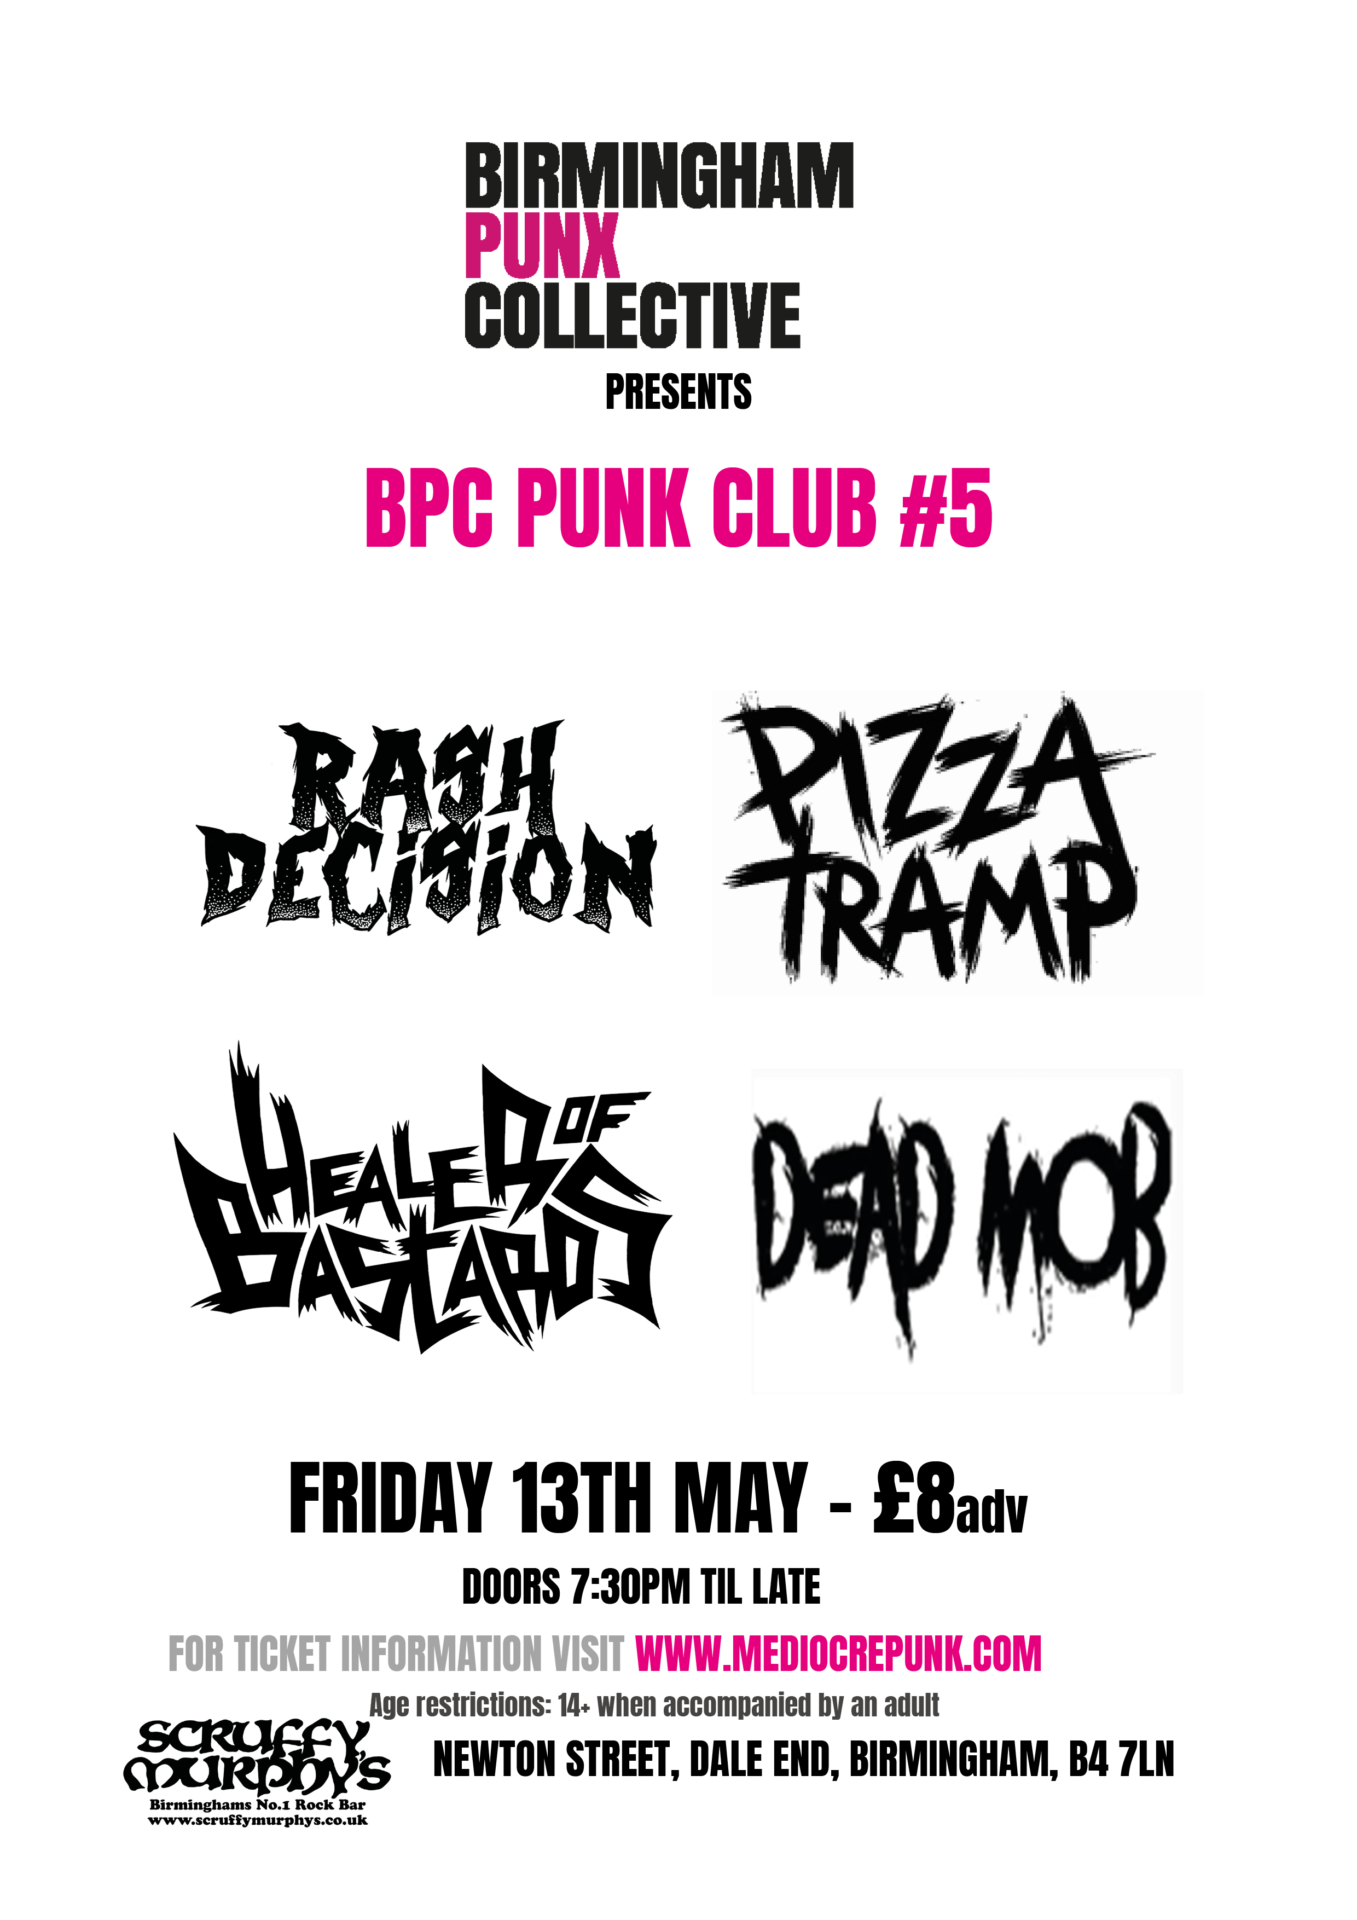 BPC #5 featuring rash decision pizzatramp healer of bastards dead mob